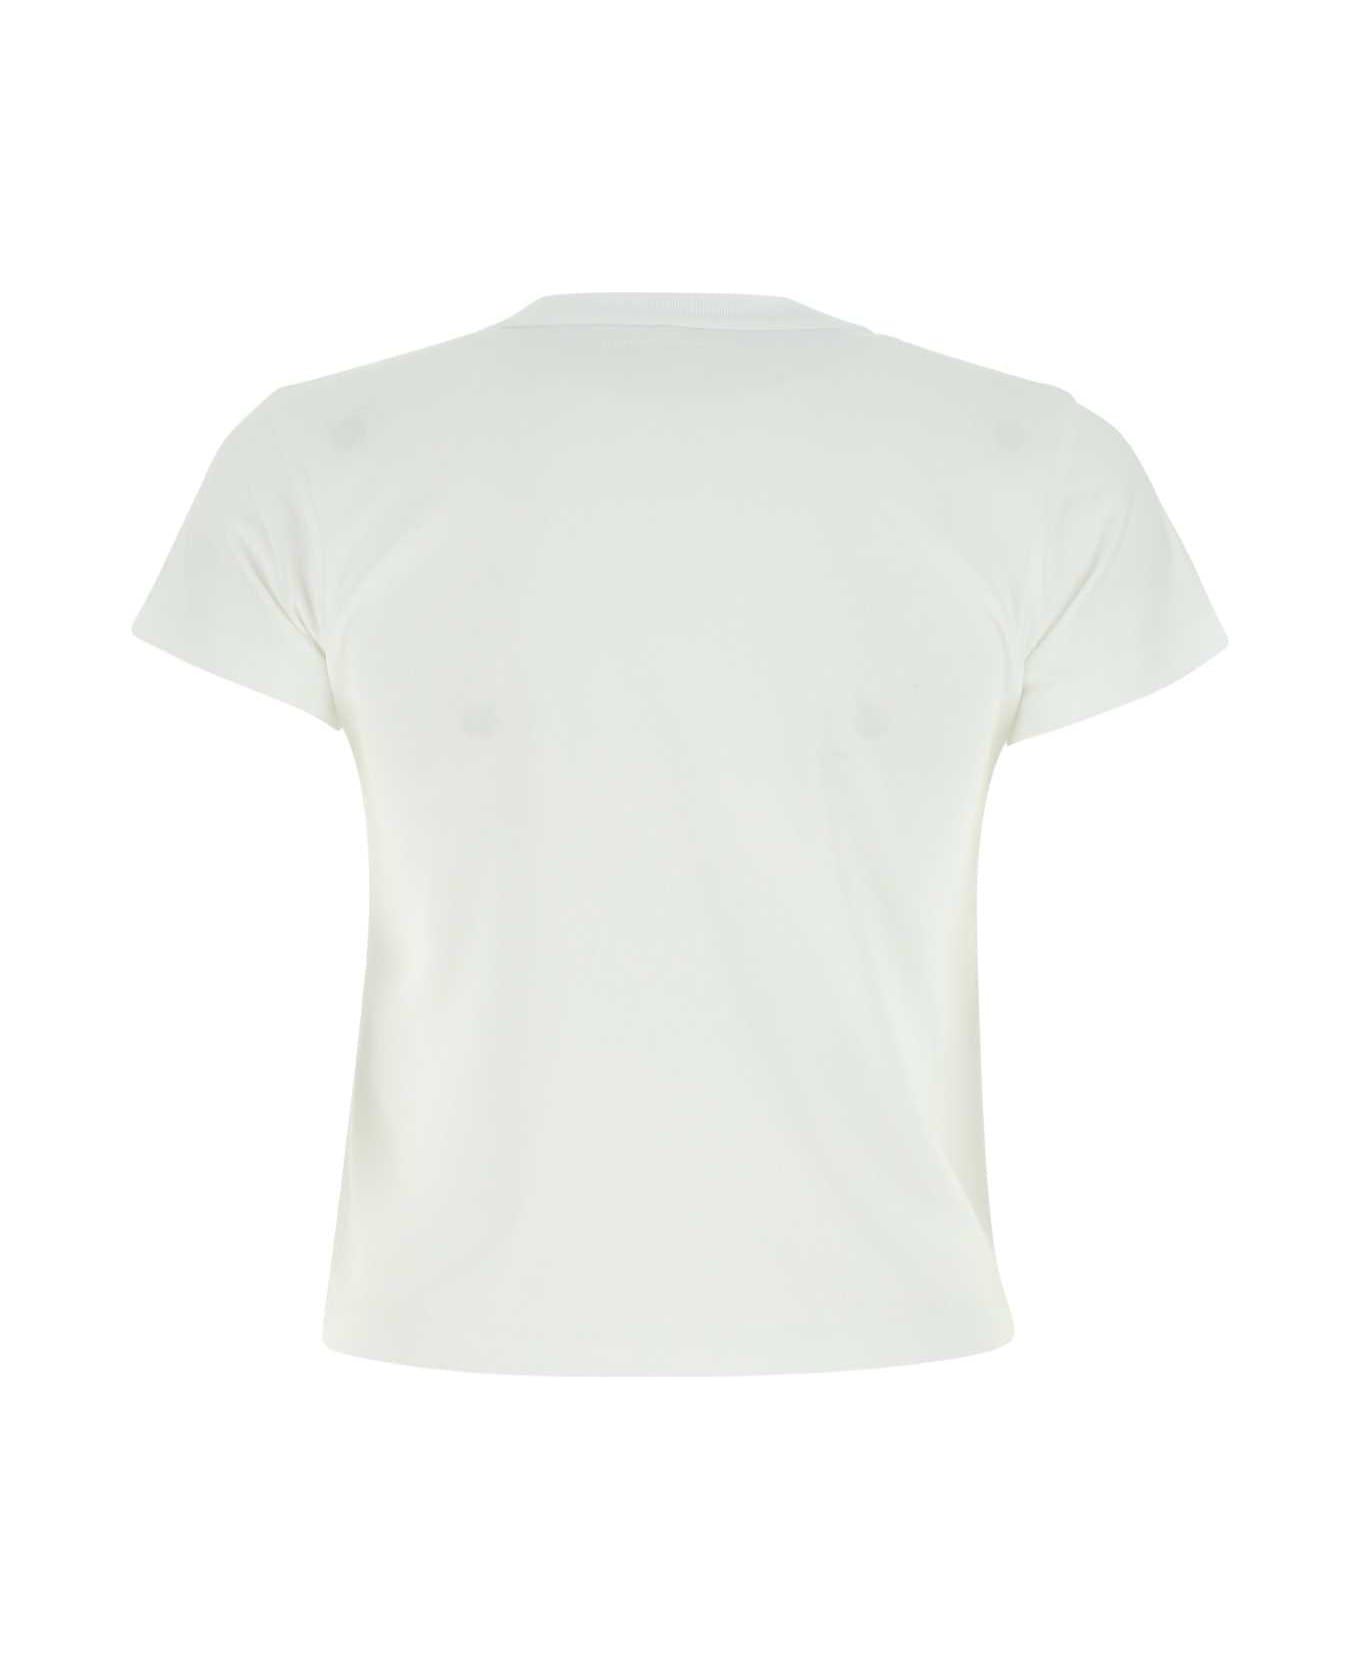 T by Alexander Wang White Cotton T-shirt - 100